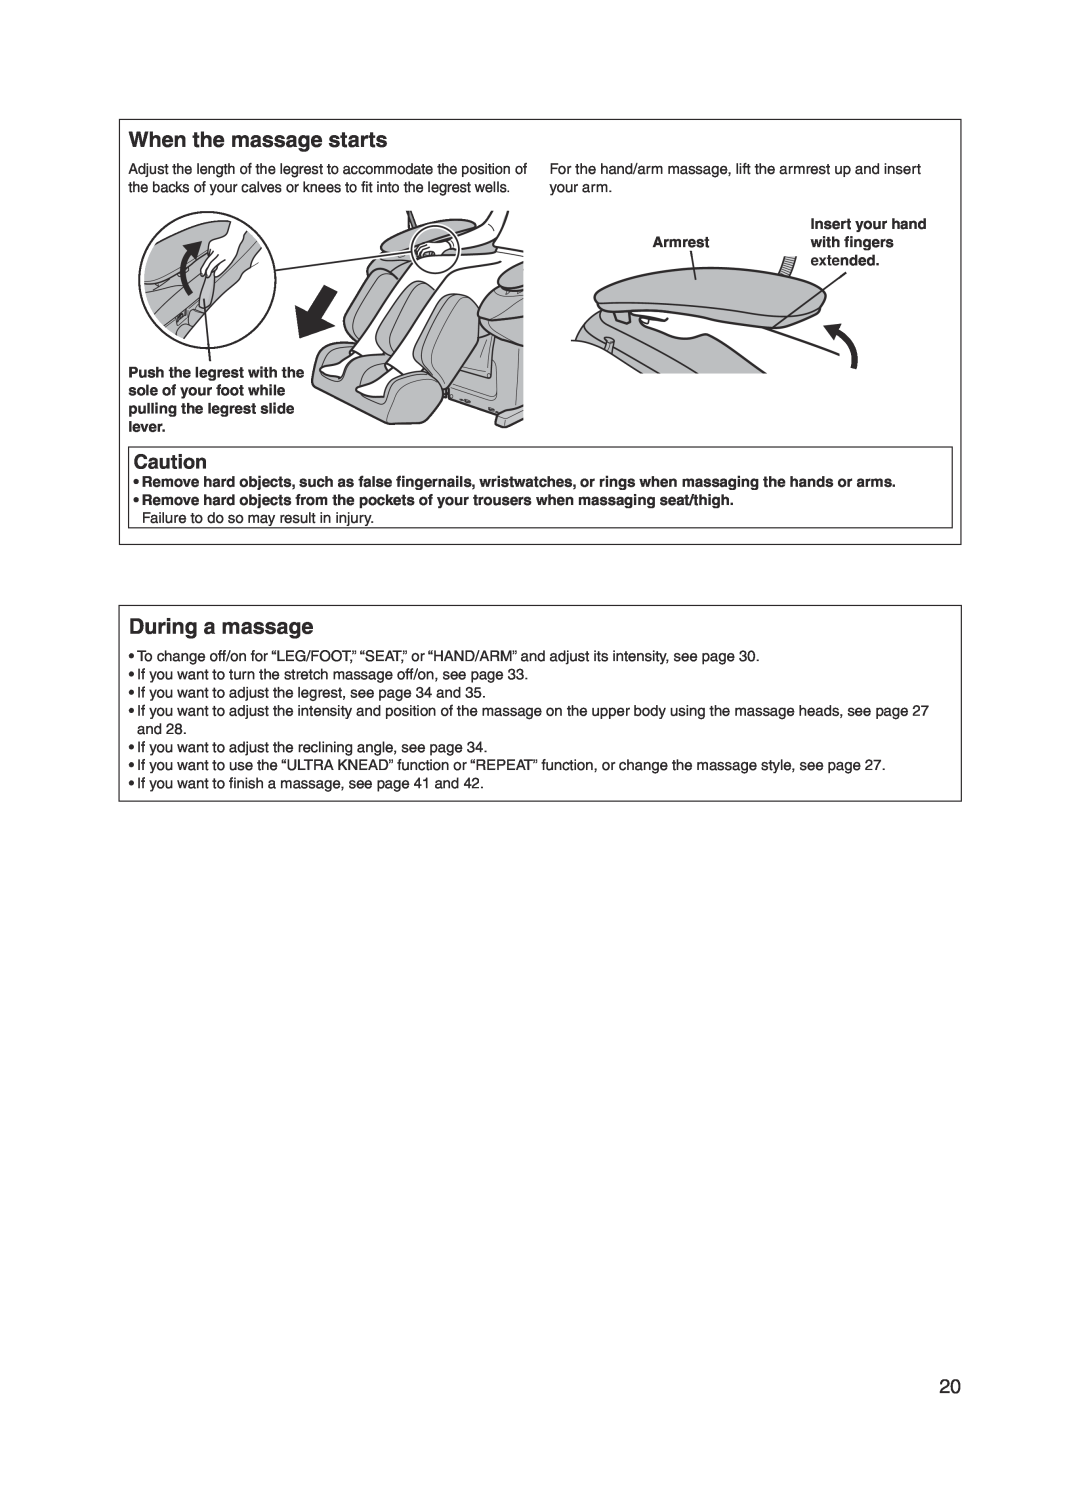 Panasonic EP30004 manual When the massage starts, During a massage 